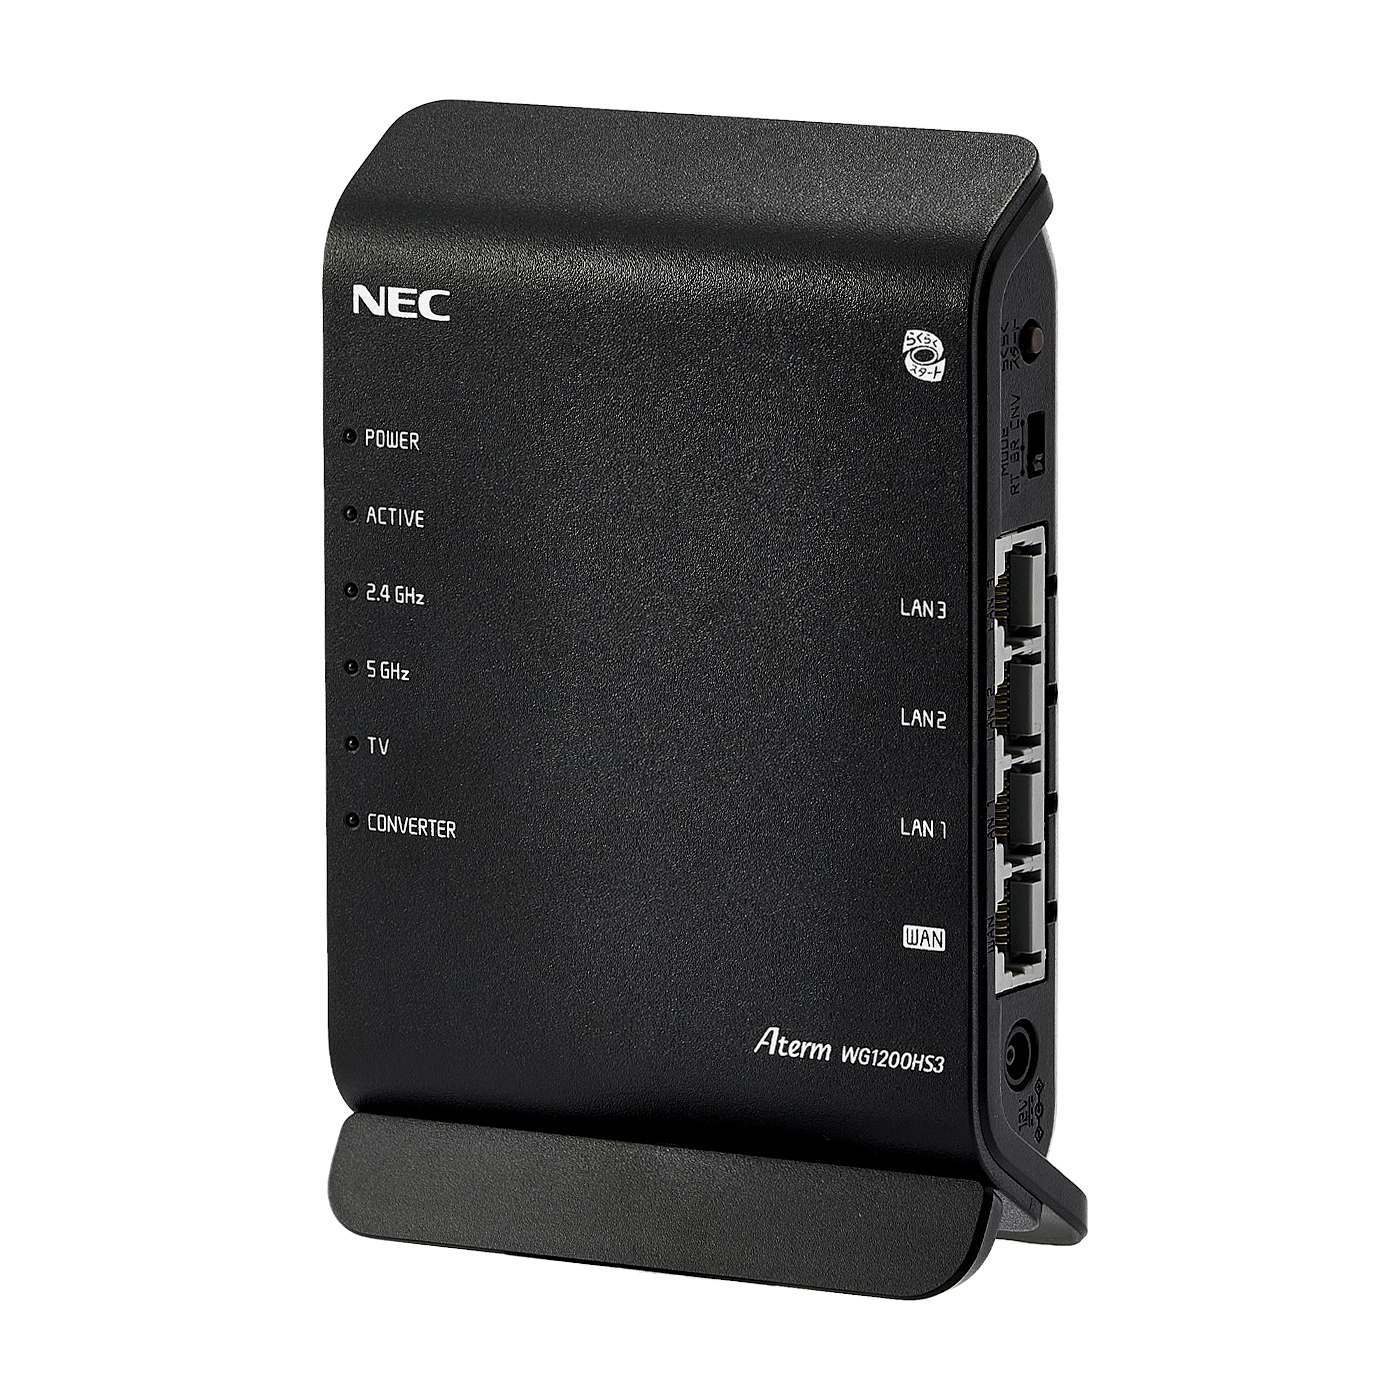 NEC NEC製 無線LANルーター Aterm WG1200HS3 PA-WG1200HS3 [管理:1050021851]